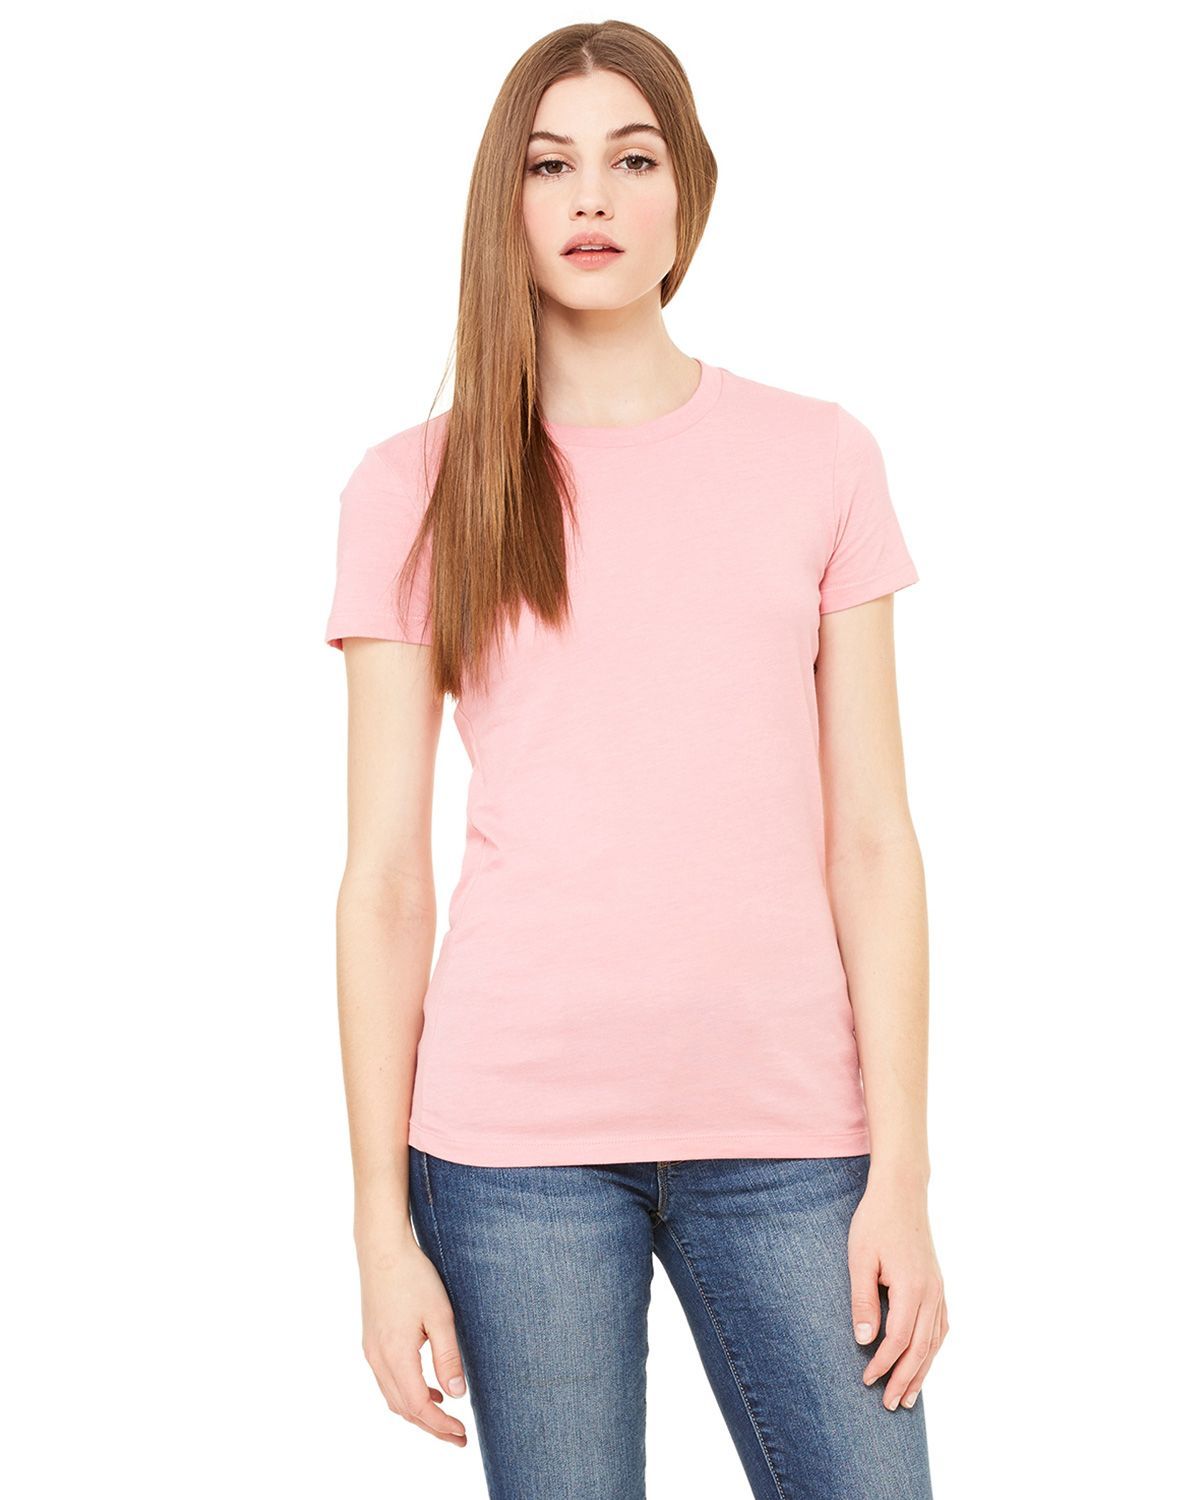 Ladies XL Light Pink Bella & Canvas T Shirt